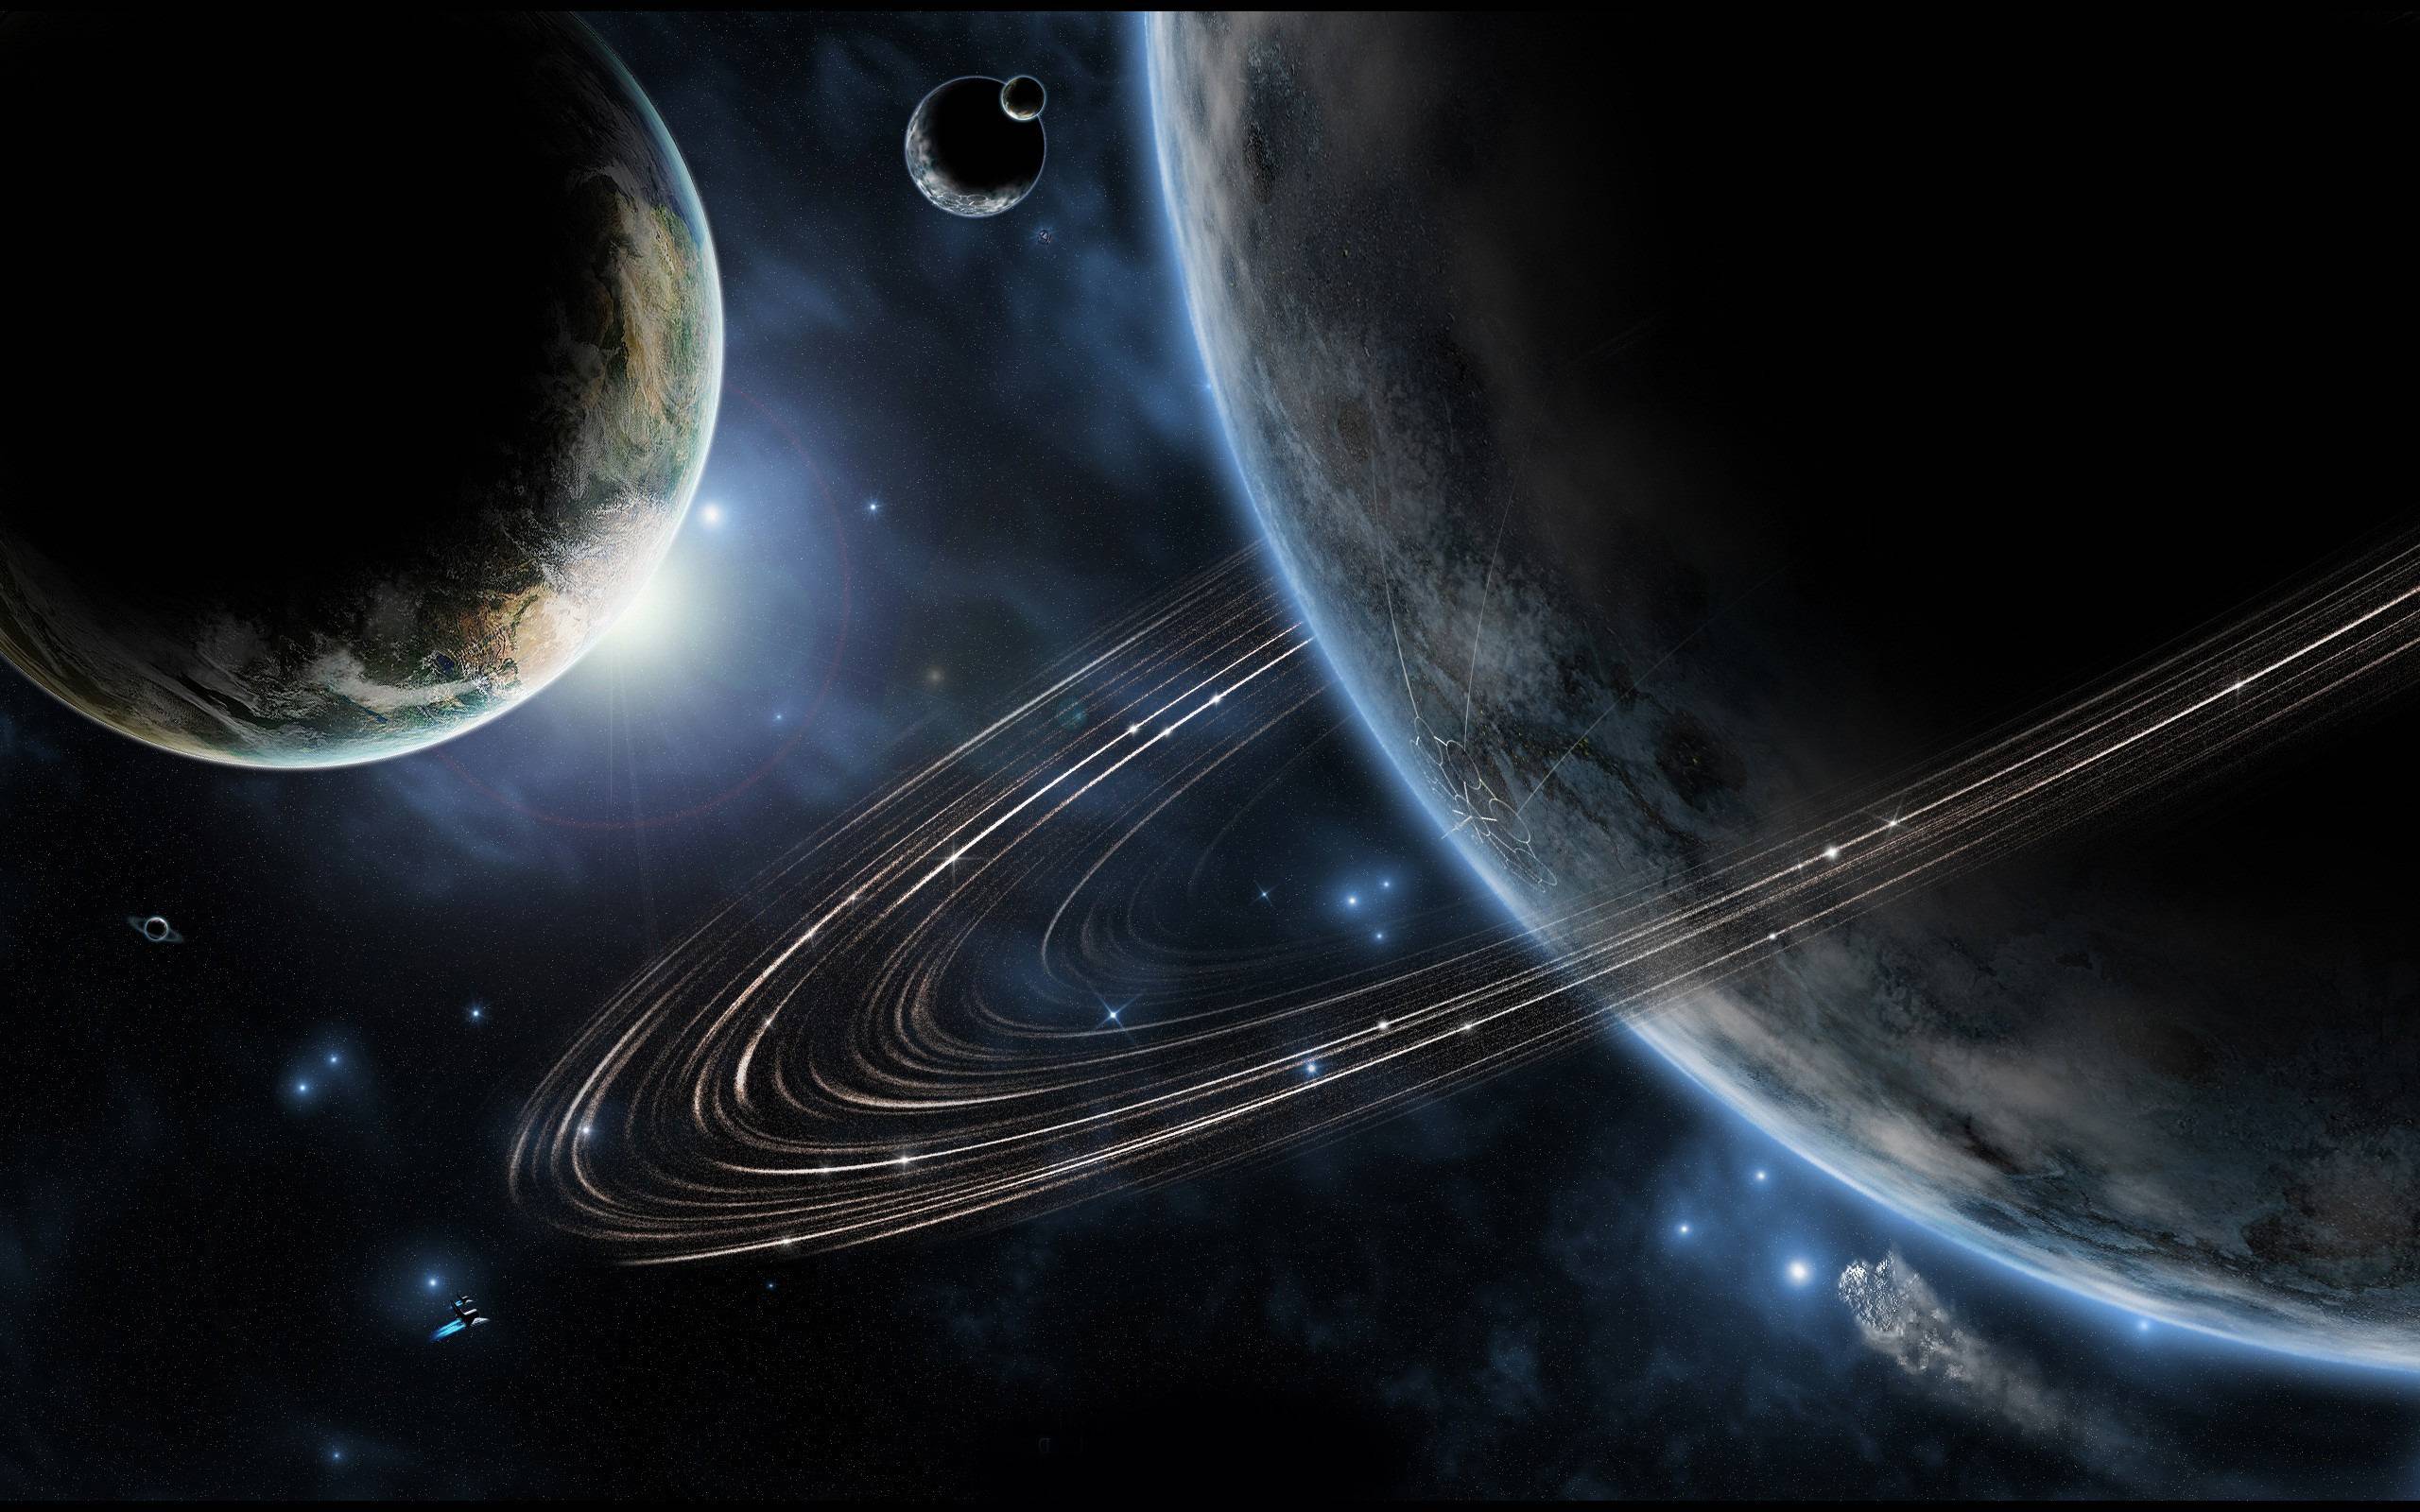 4k Ultra Hd Planets Wallpapers Top Free 4k Ultra Hd Planets Backgrounds Wallpaperaccess 4021